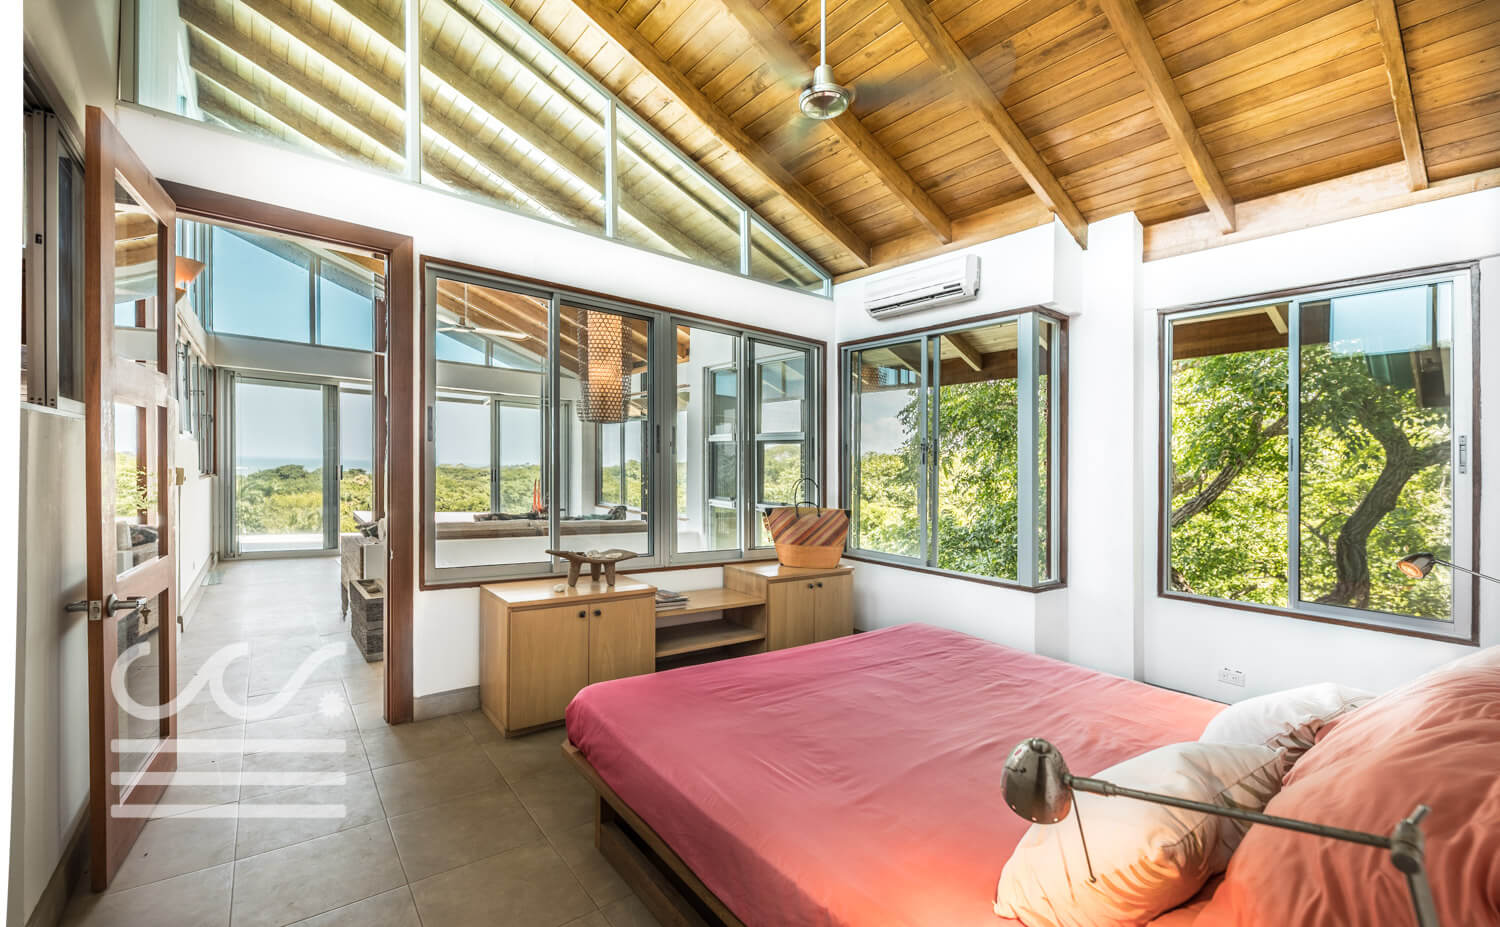 Casa-Luca-Wanderlust-Realty-Real-Estate-Retals-Nosara-Costa-Rica-36compressed.jpg